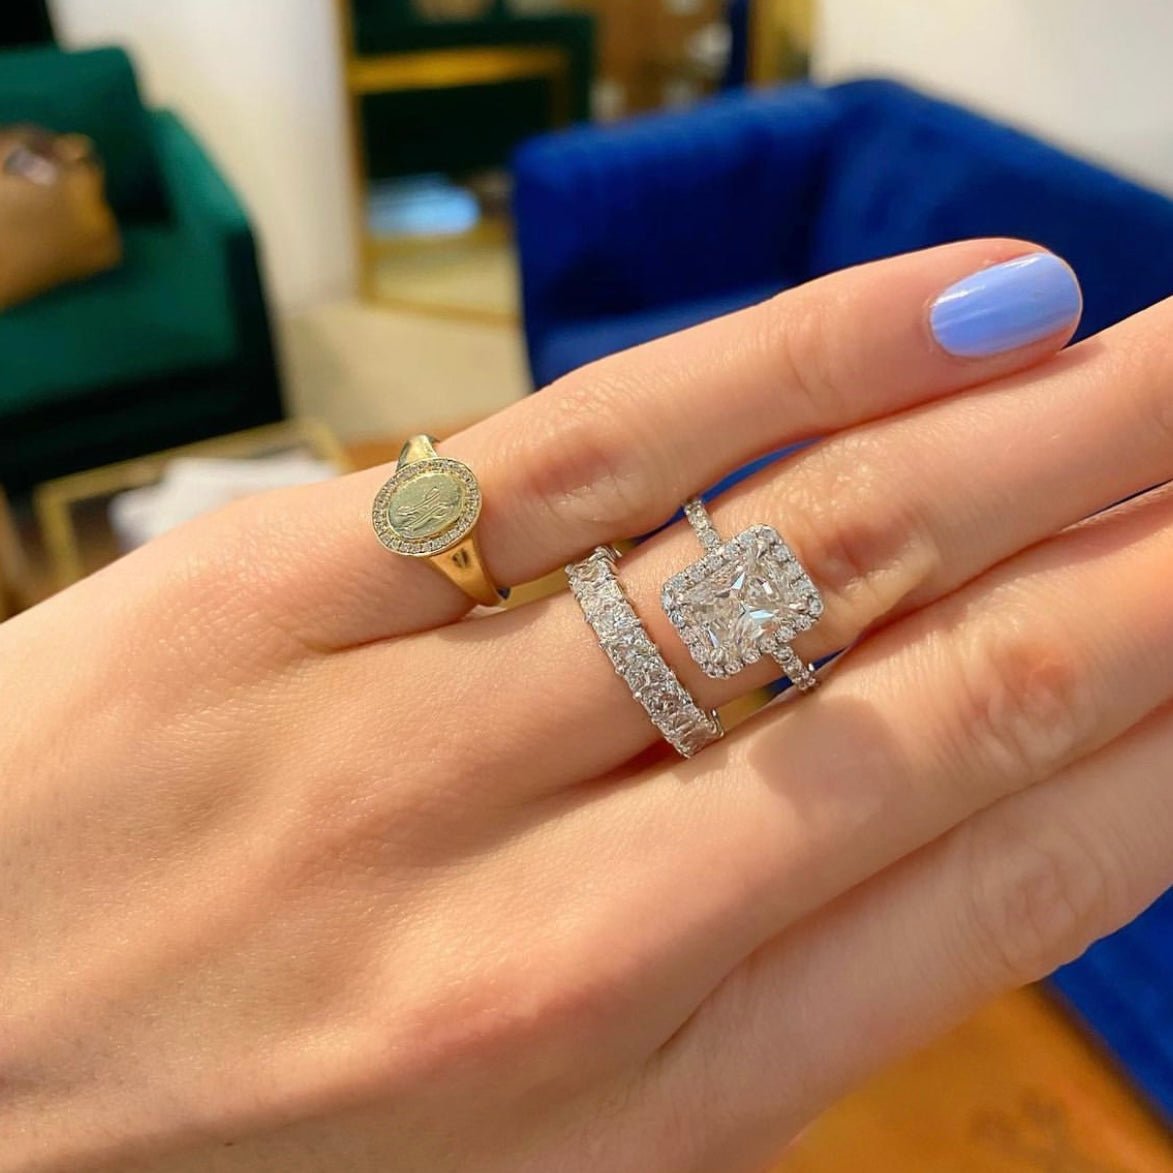 Emerald-Shaped Diamond Star Halo Engagement Ring - Bdd2545E-W – Droste's  Jewelry Shoppes